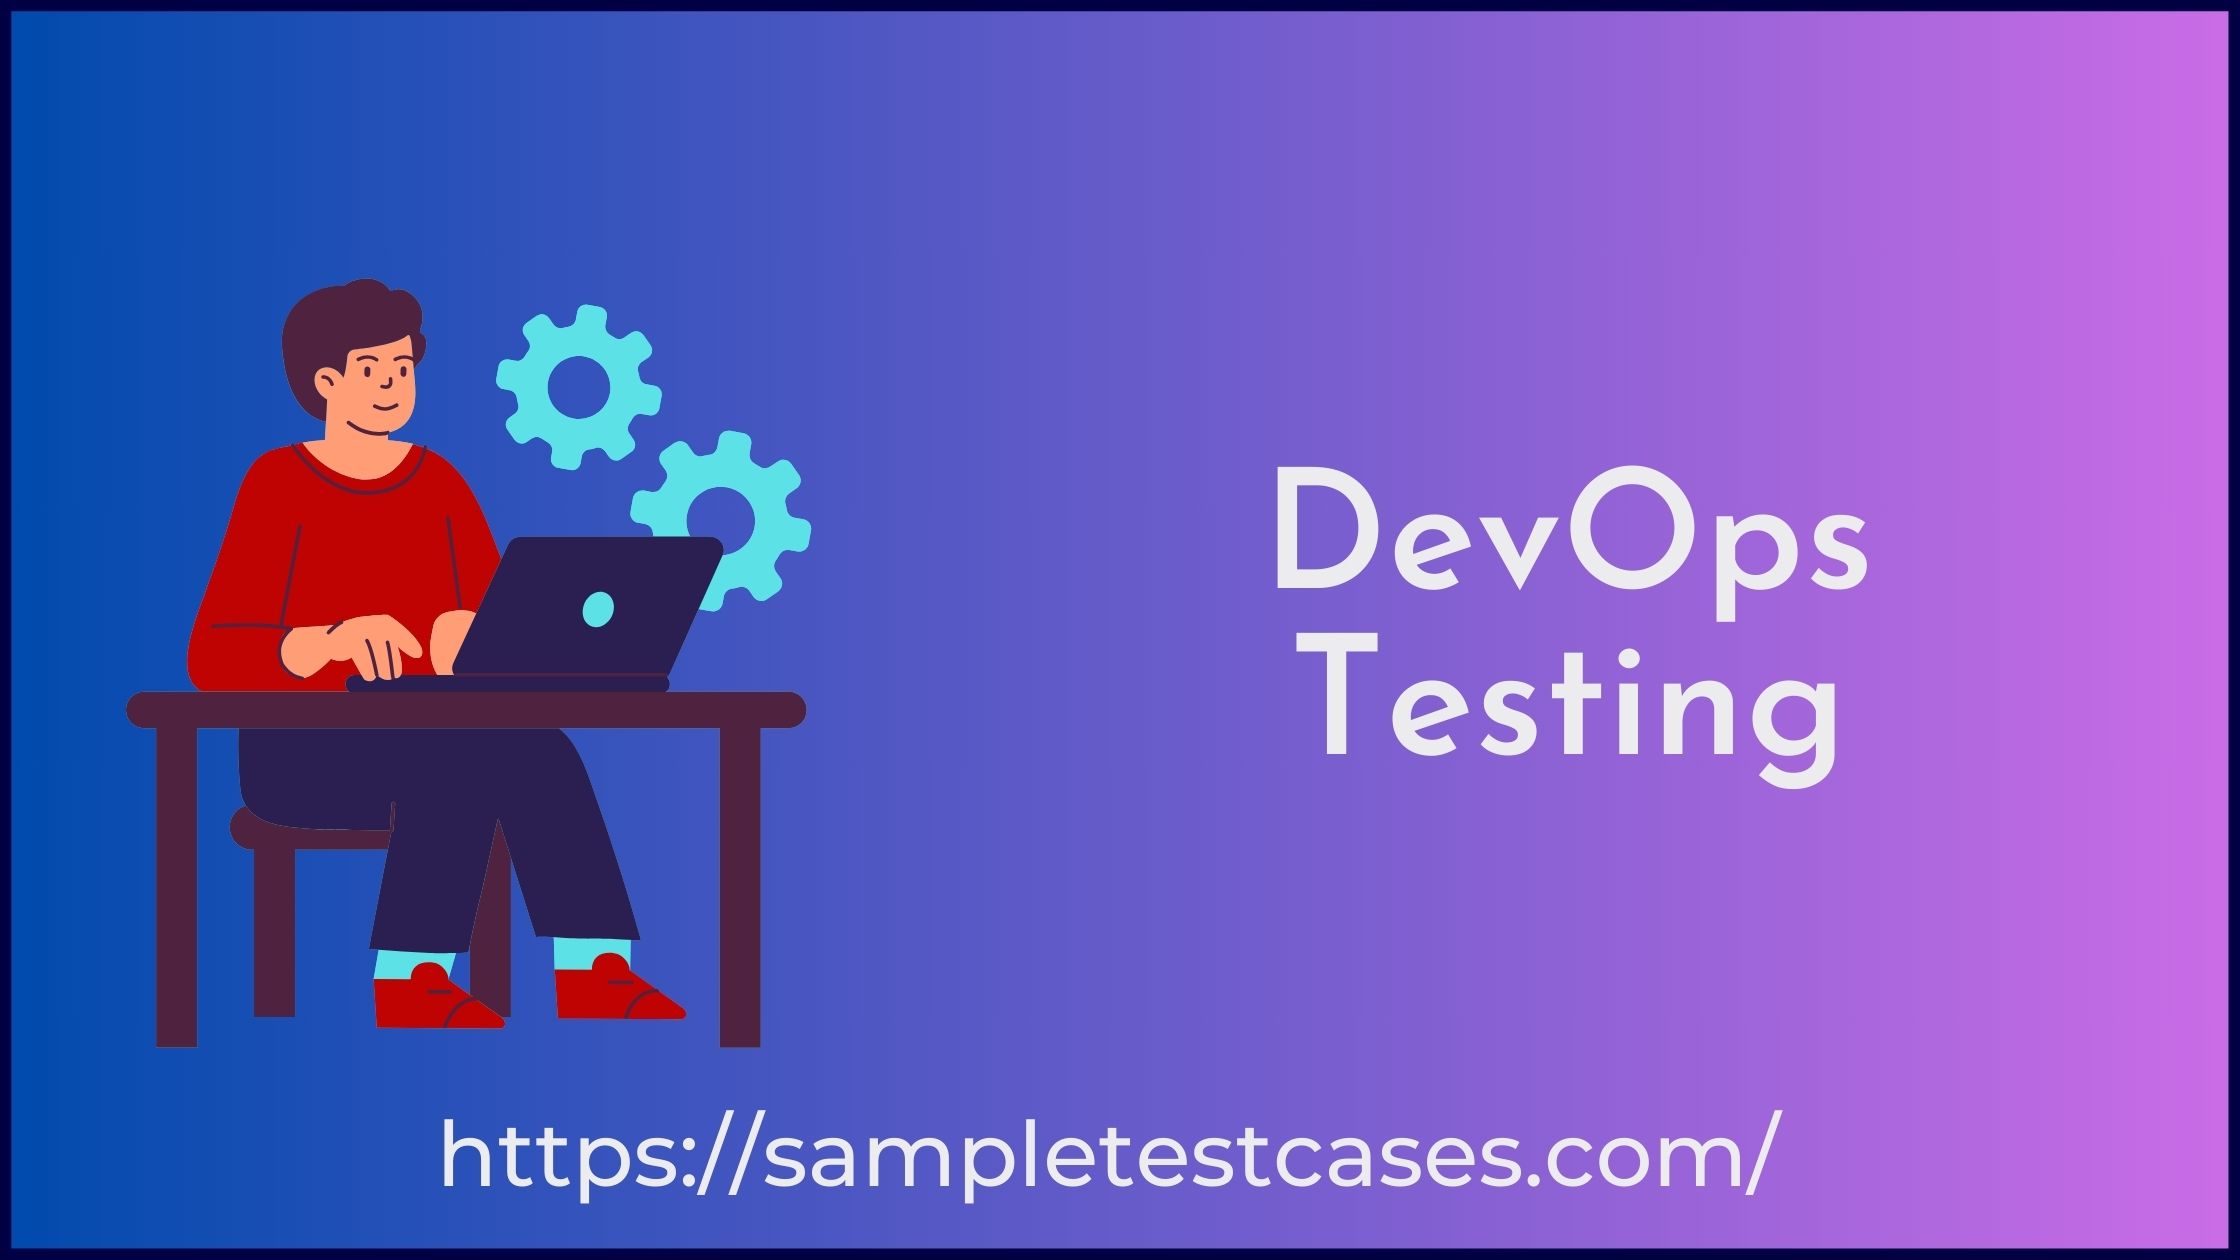 What is DevOps Testing?